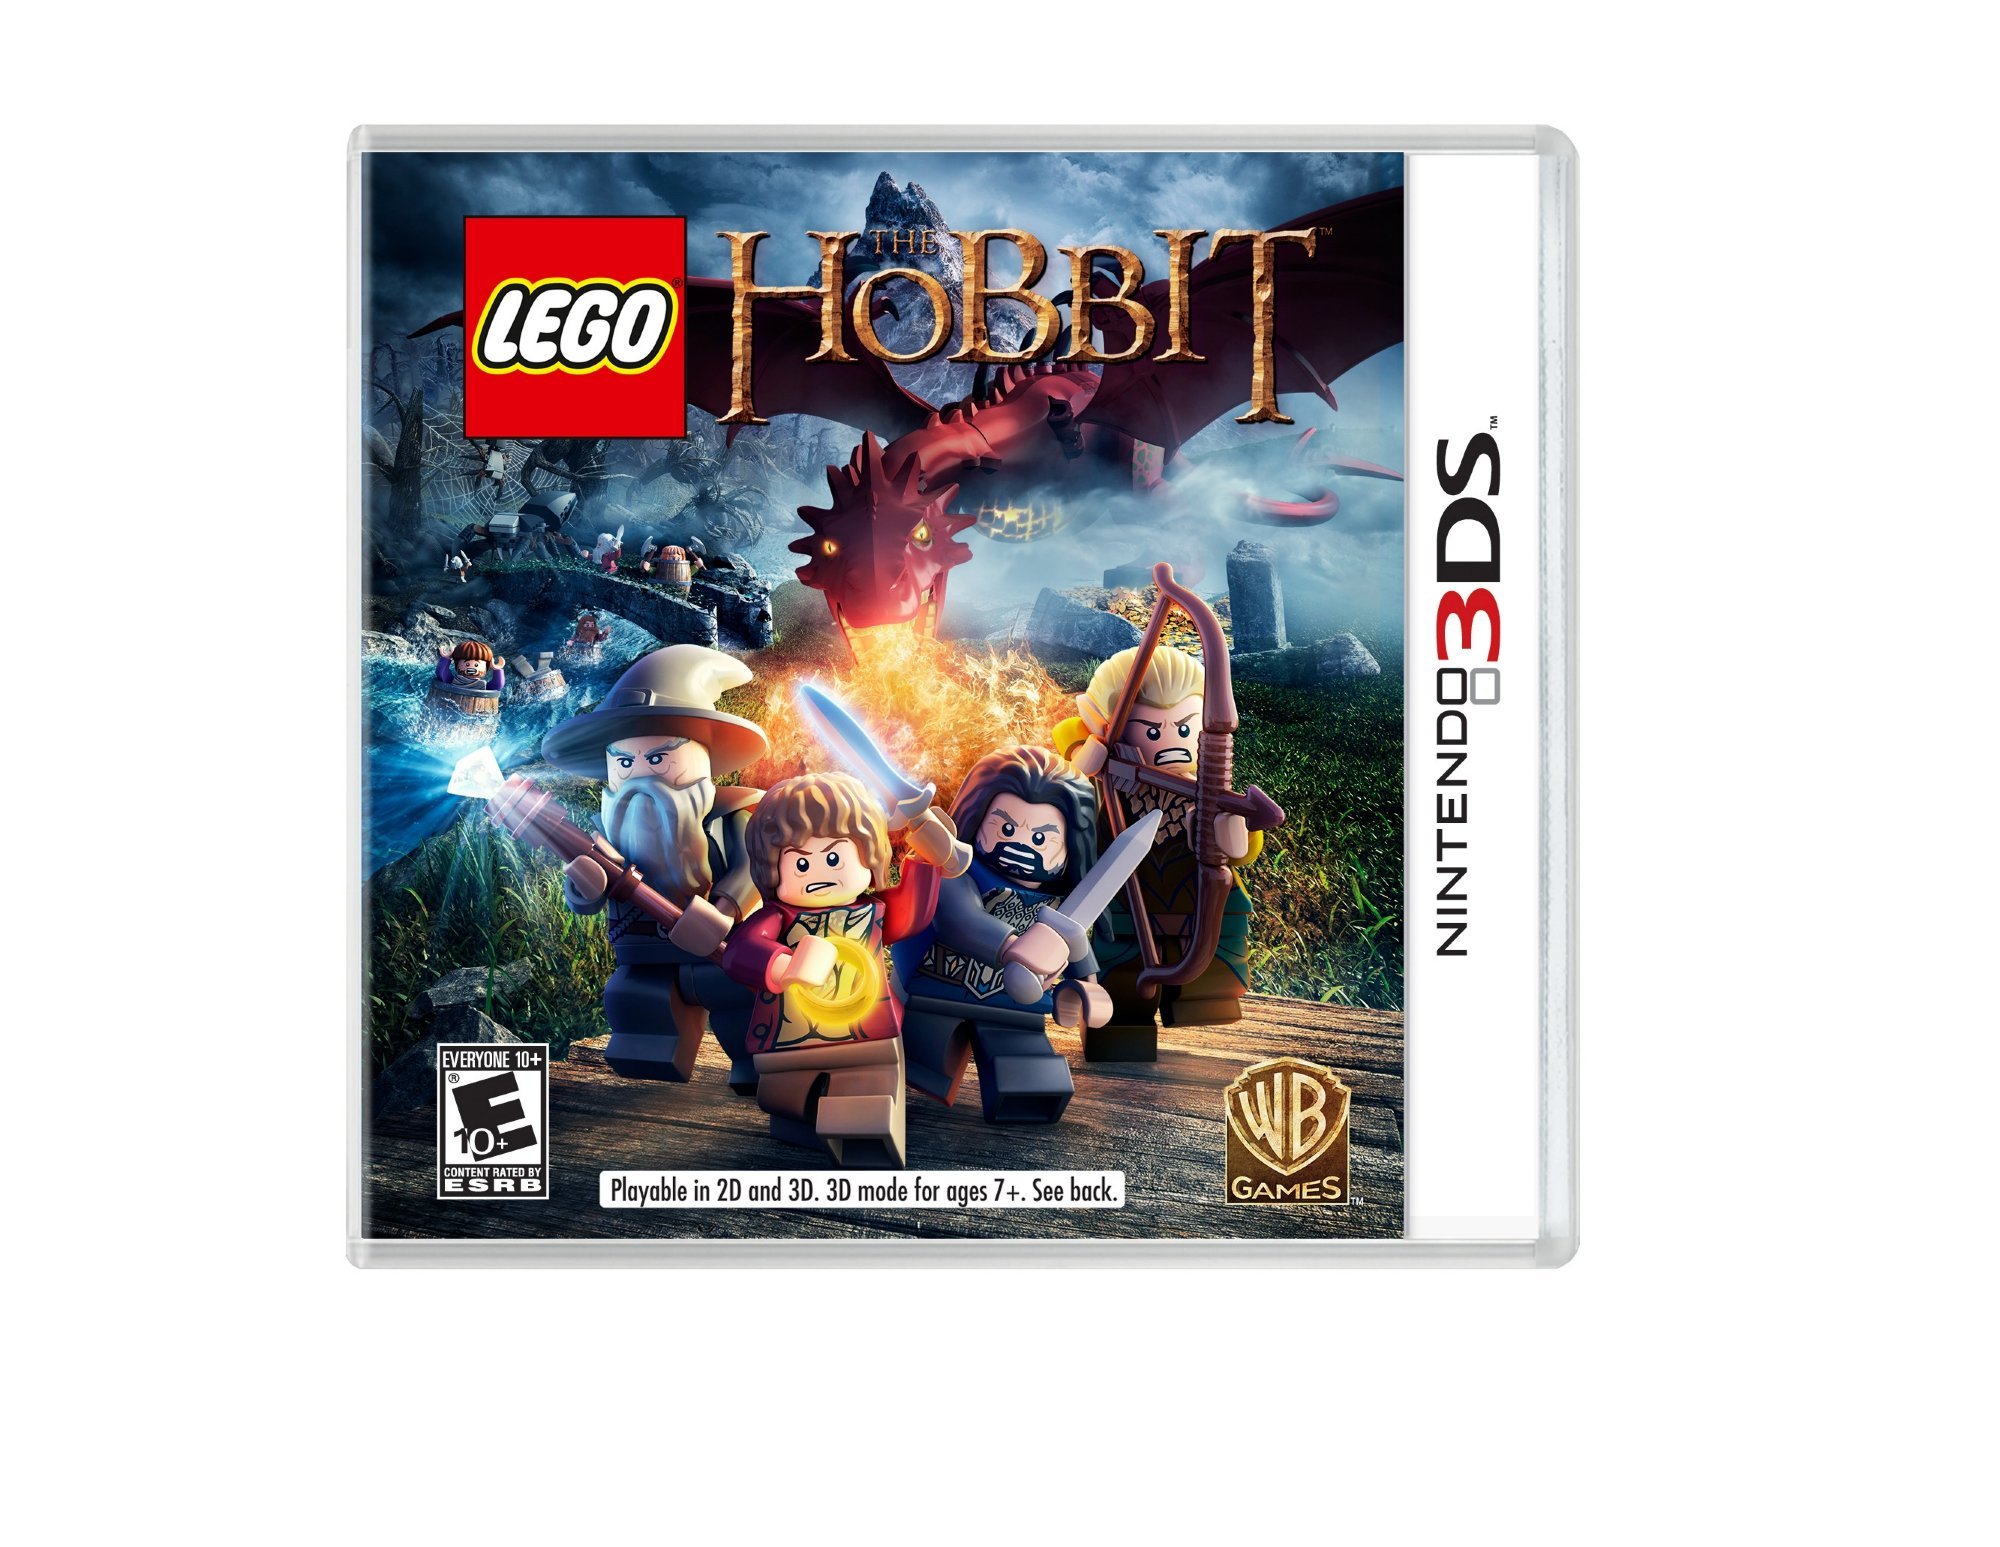 WB Games Lego The Hobbit - Nintendo 3DS